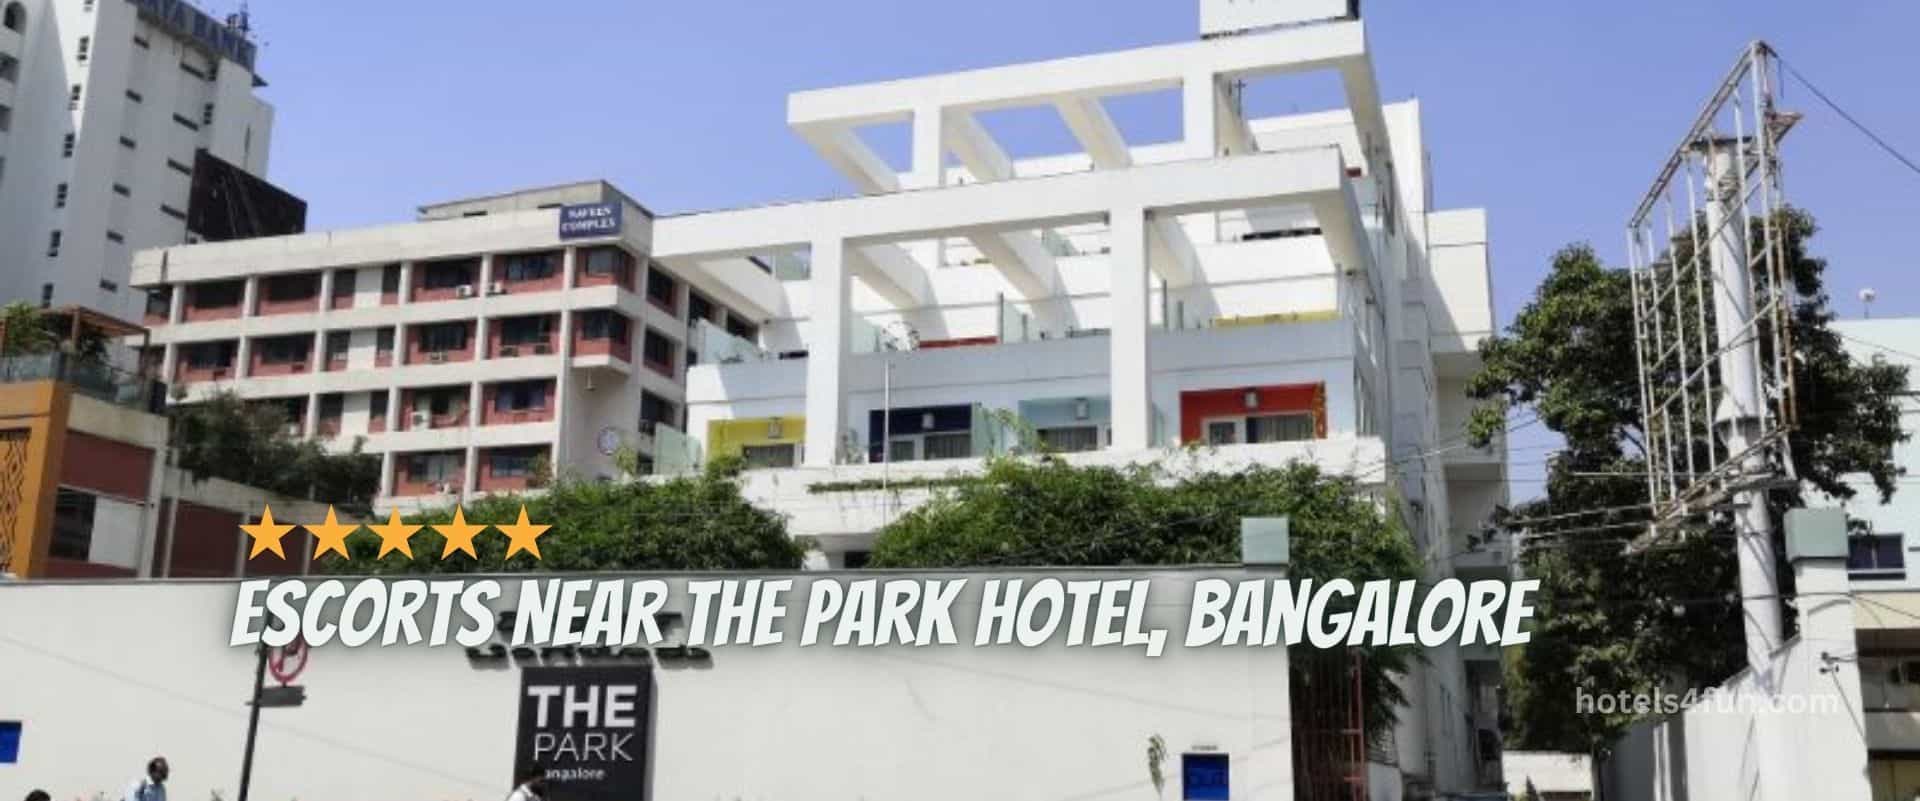 The Park Hotel Bangalore